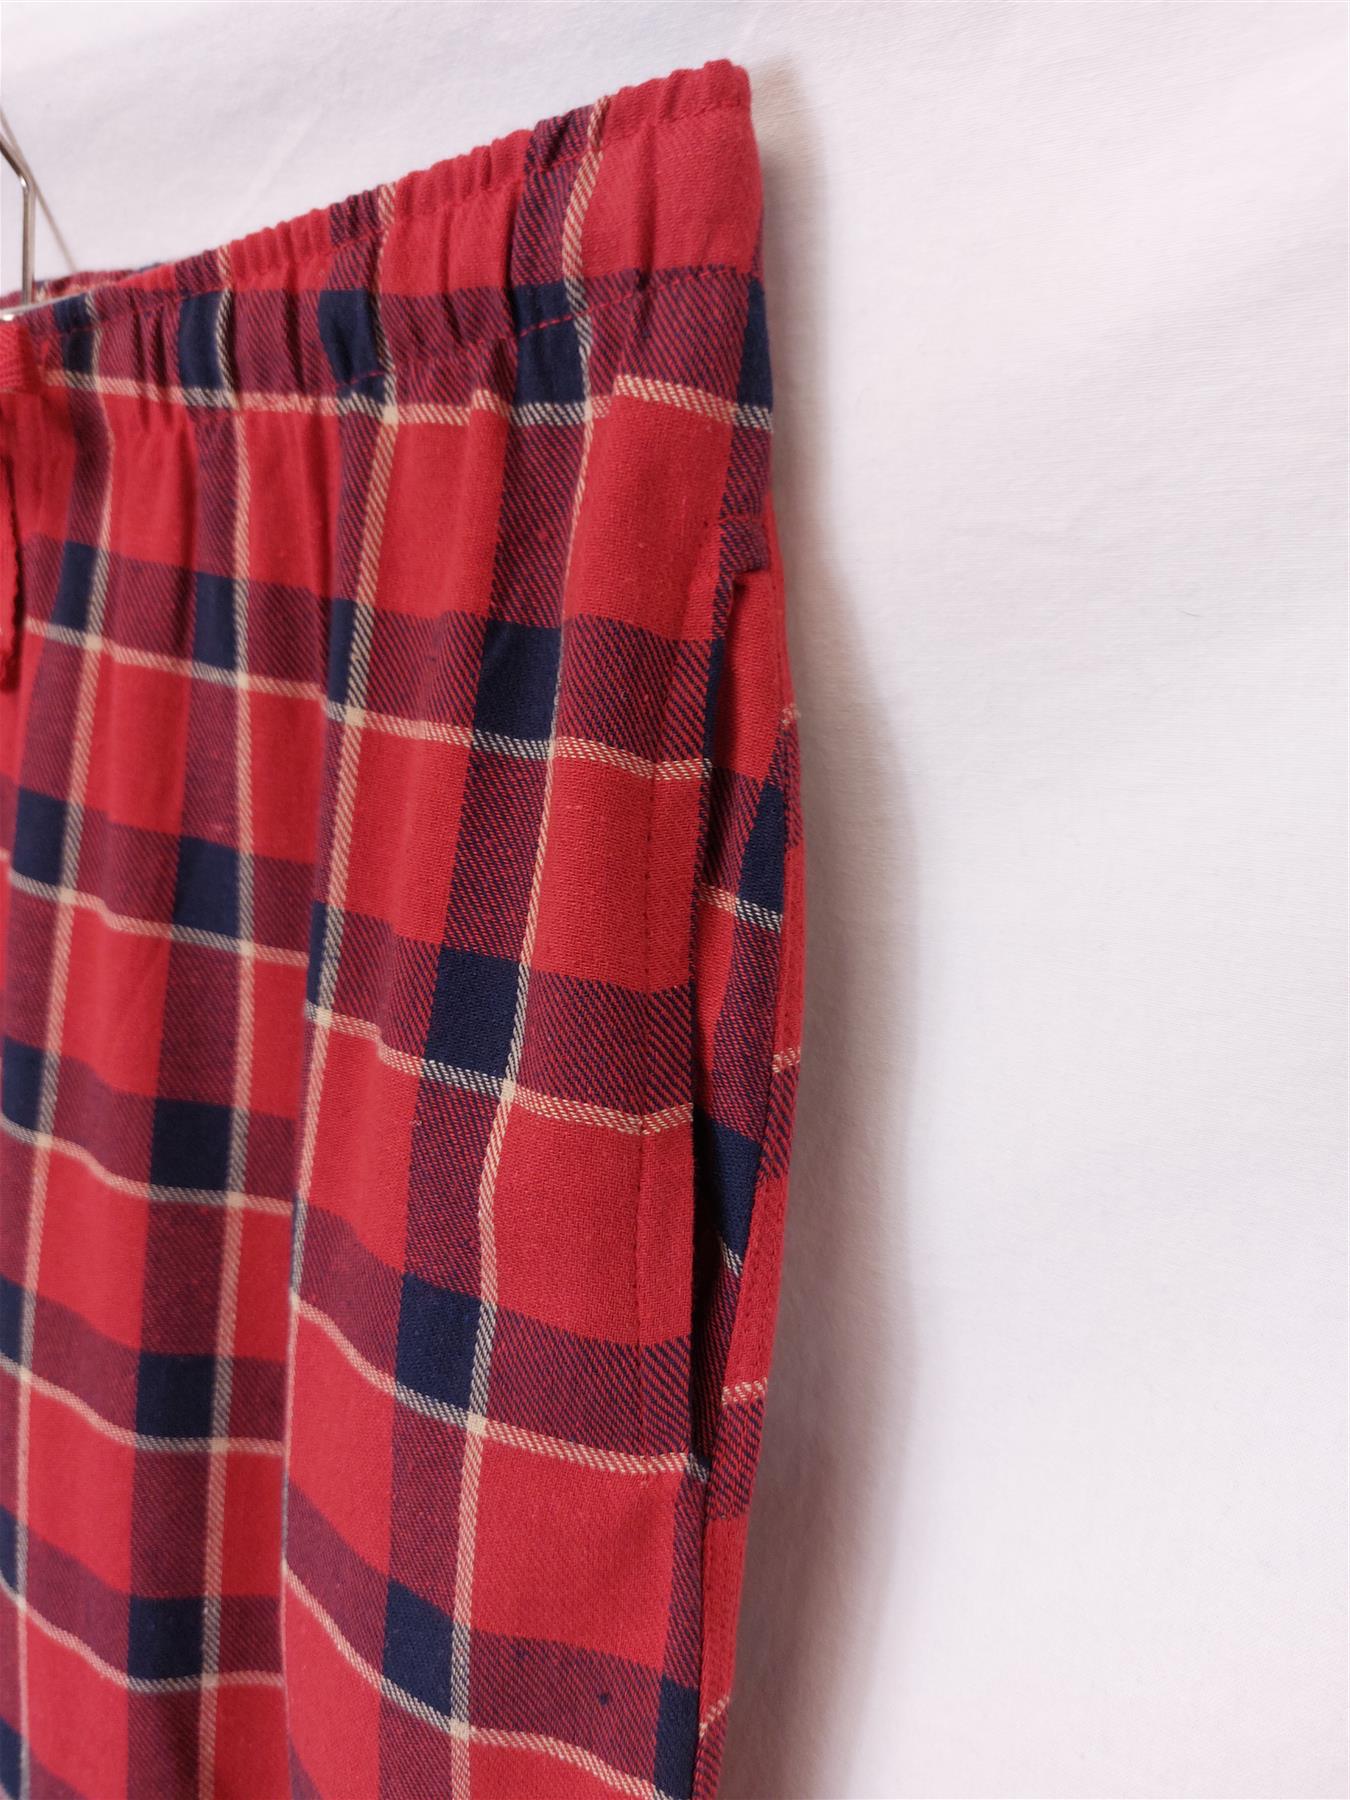 Women's Cotton Pyjama Bottoms Soft Warm Comfy Red Navy Check Valentines PJ Pants